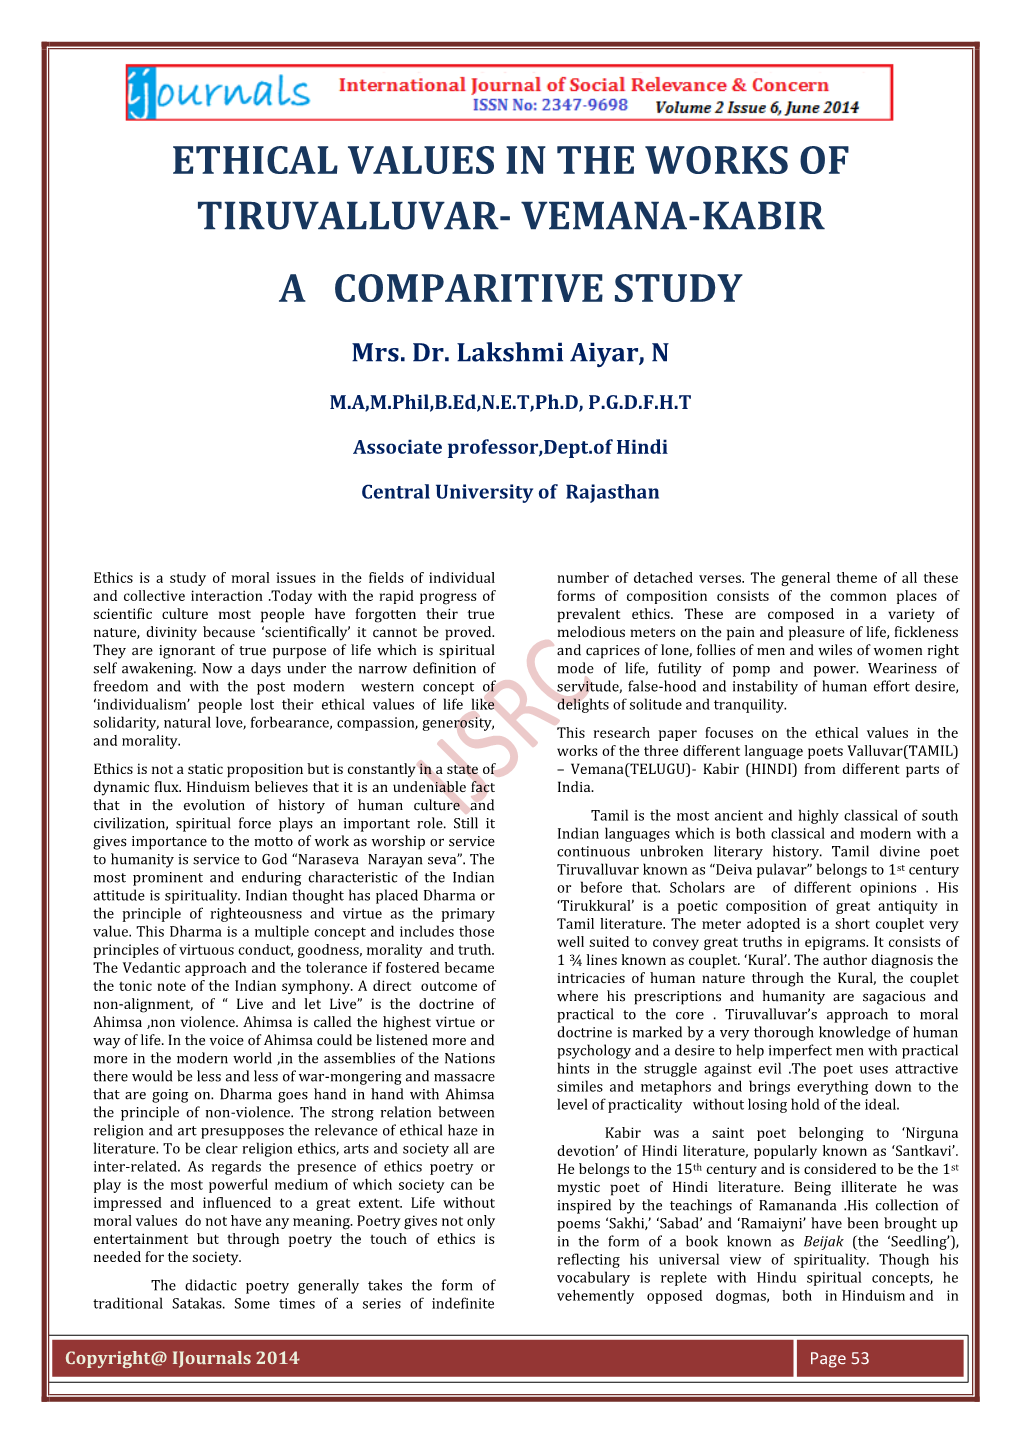 Vemana-Kabir a Comparitive Study